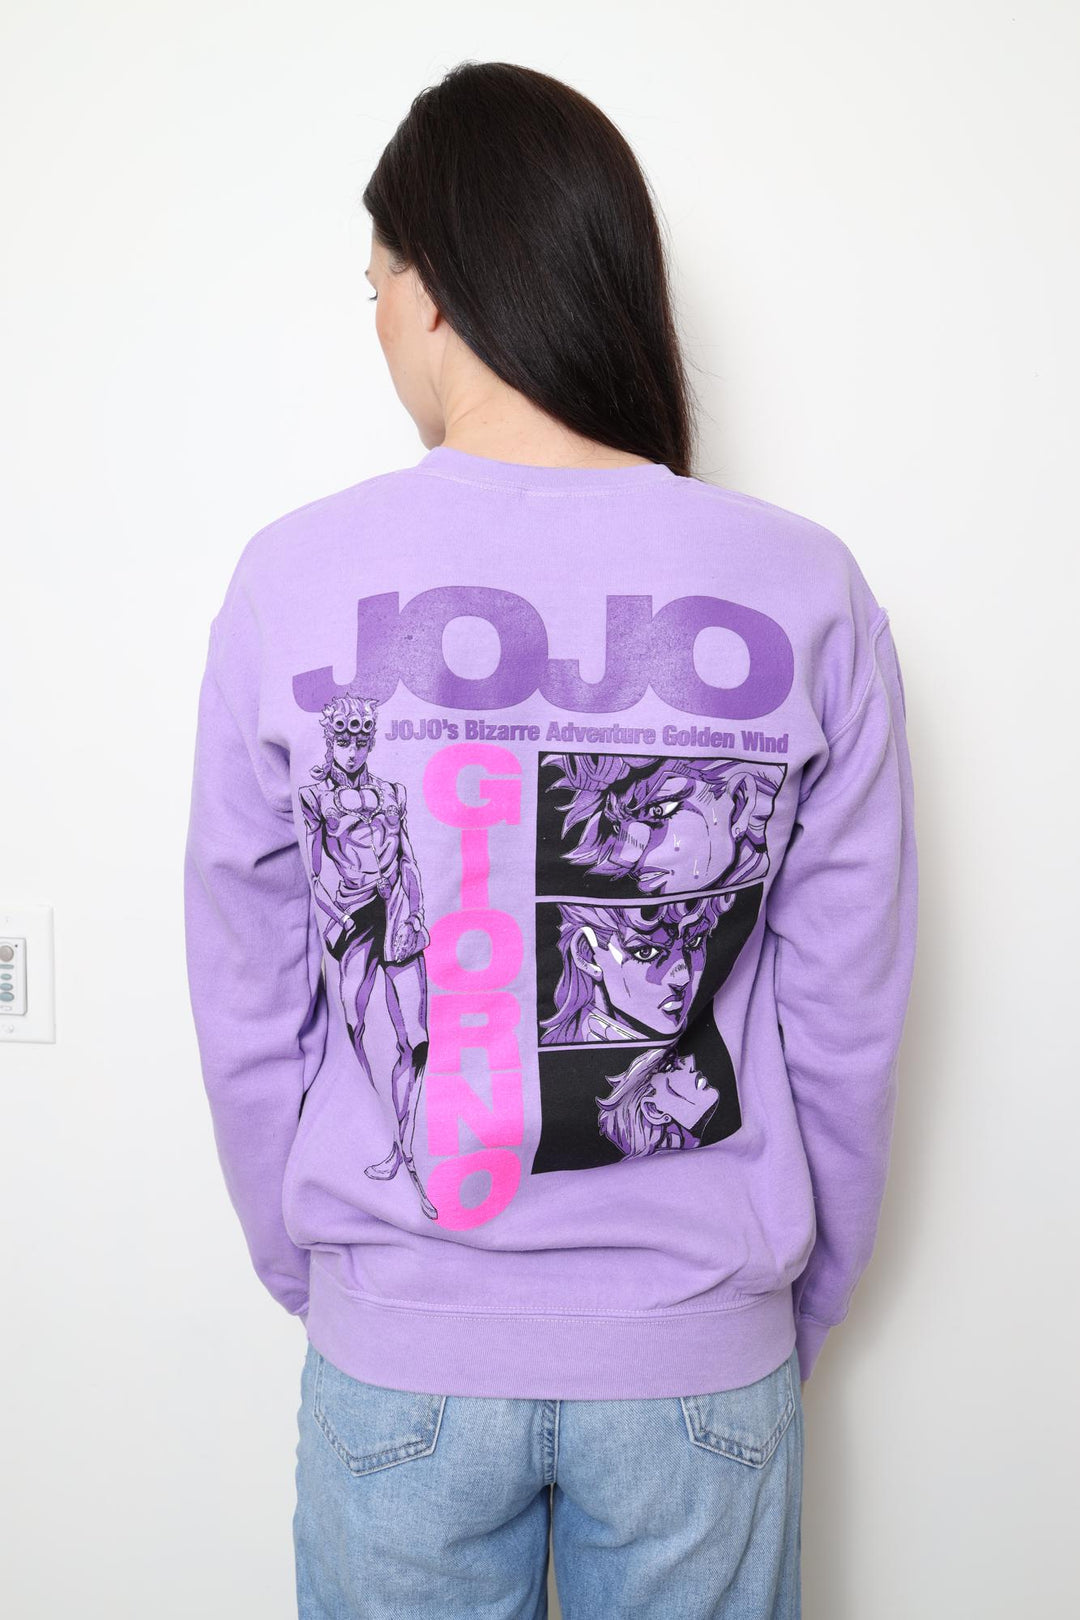 JoJo's Bizarre Adventure Giorno Golden Wind - Front & Back Print - Licensed Adult Sweatshirt